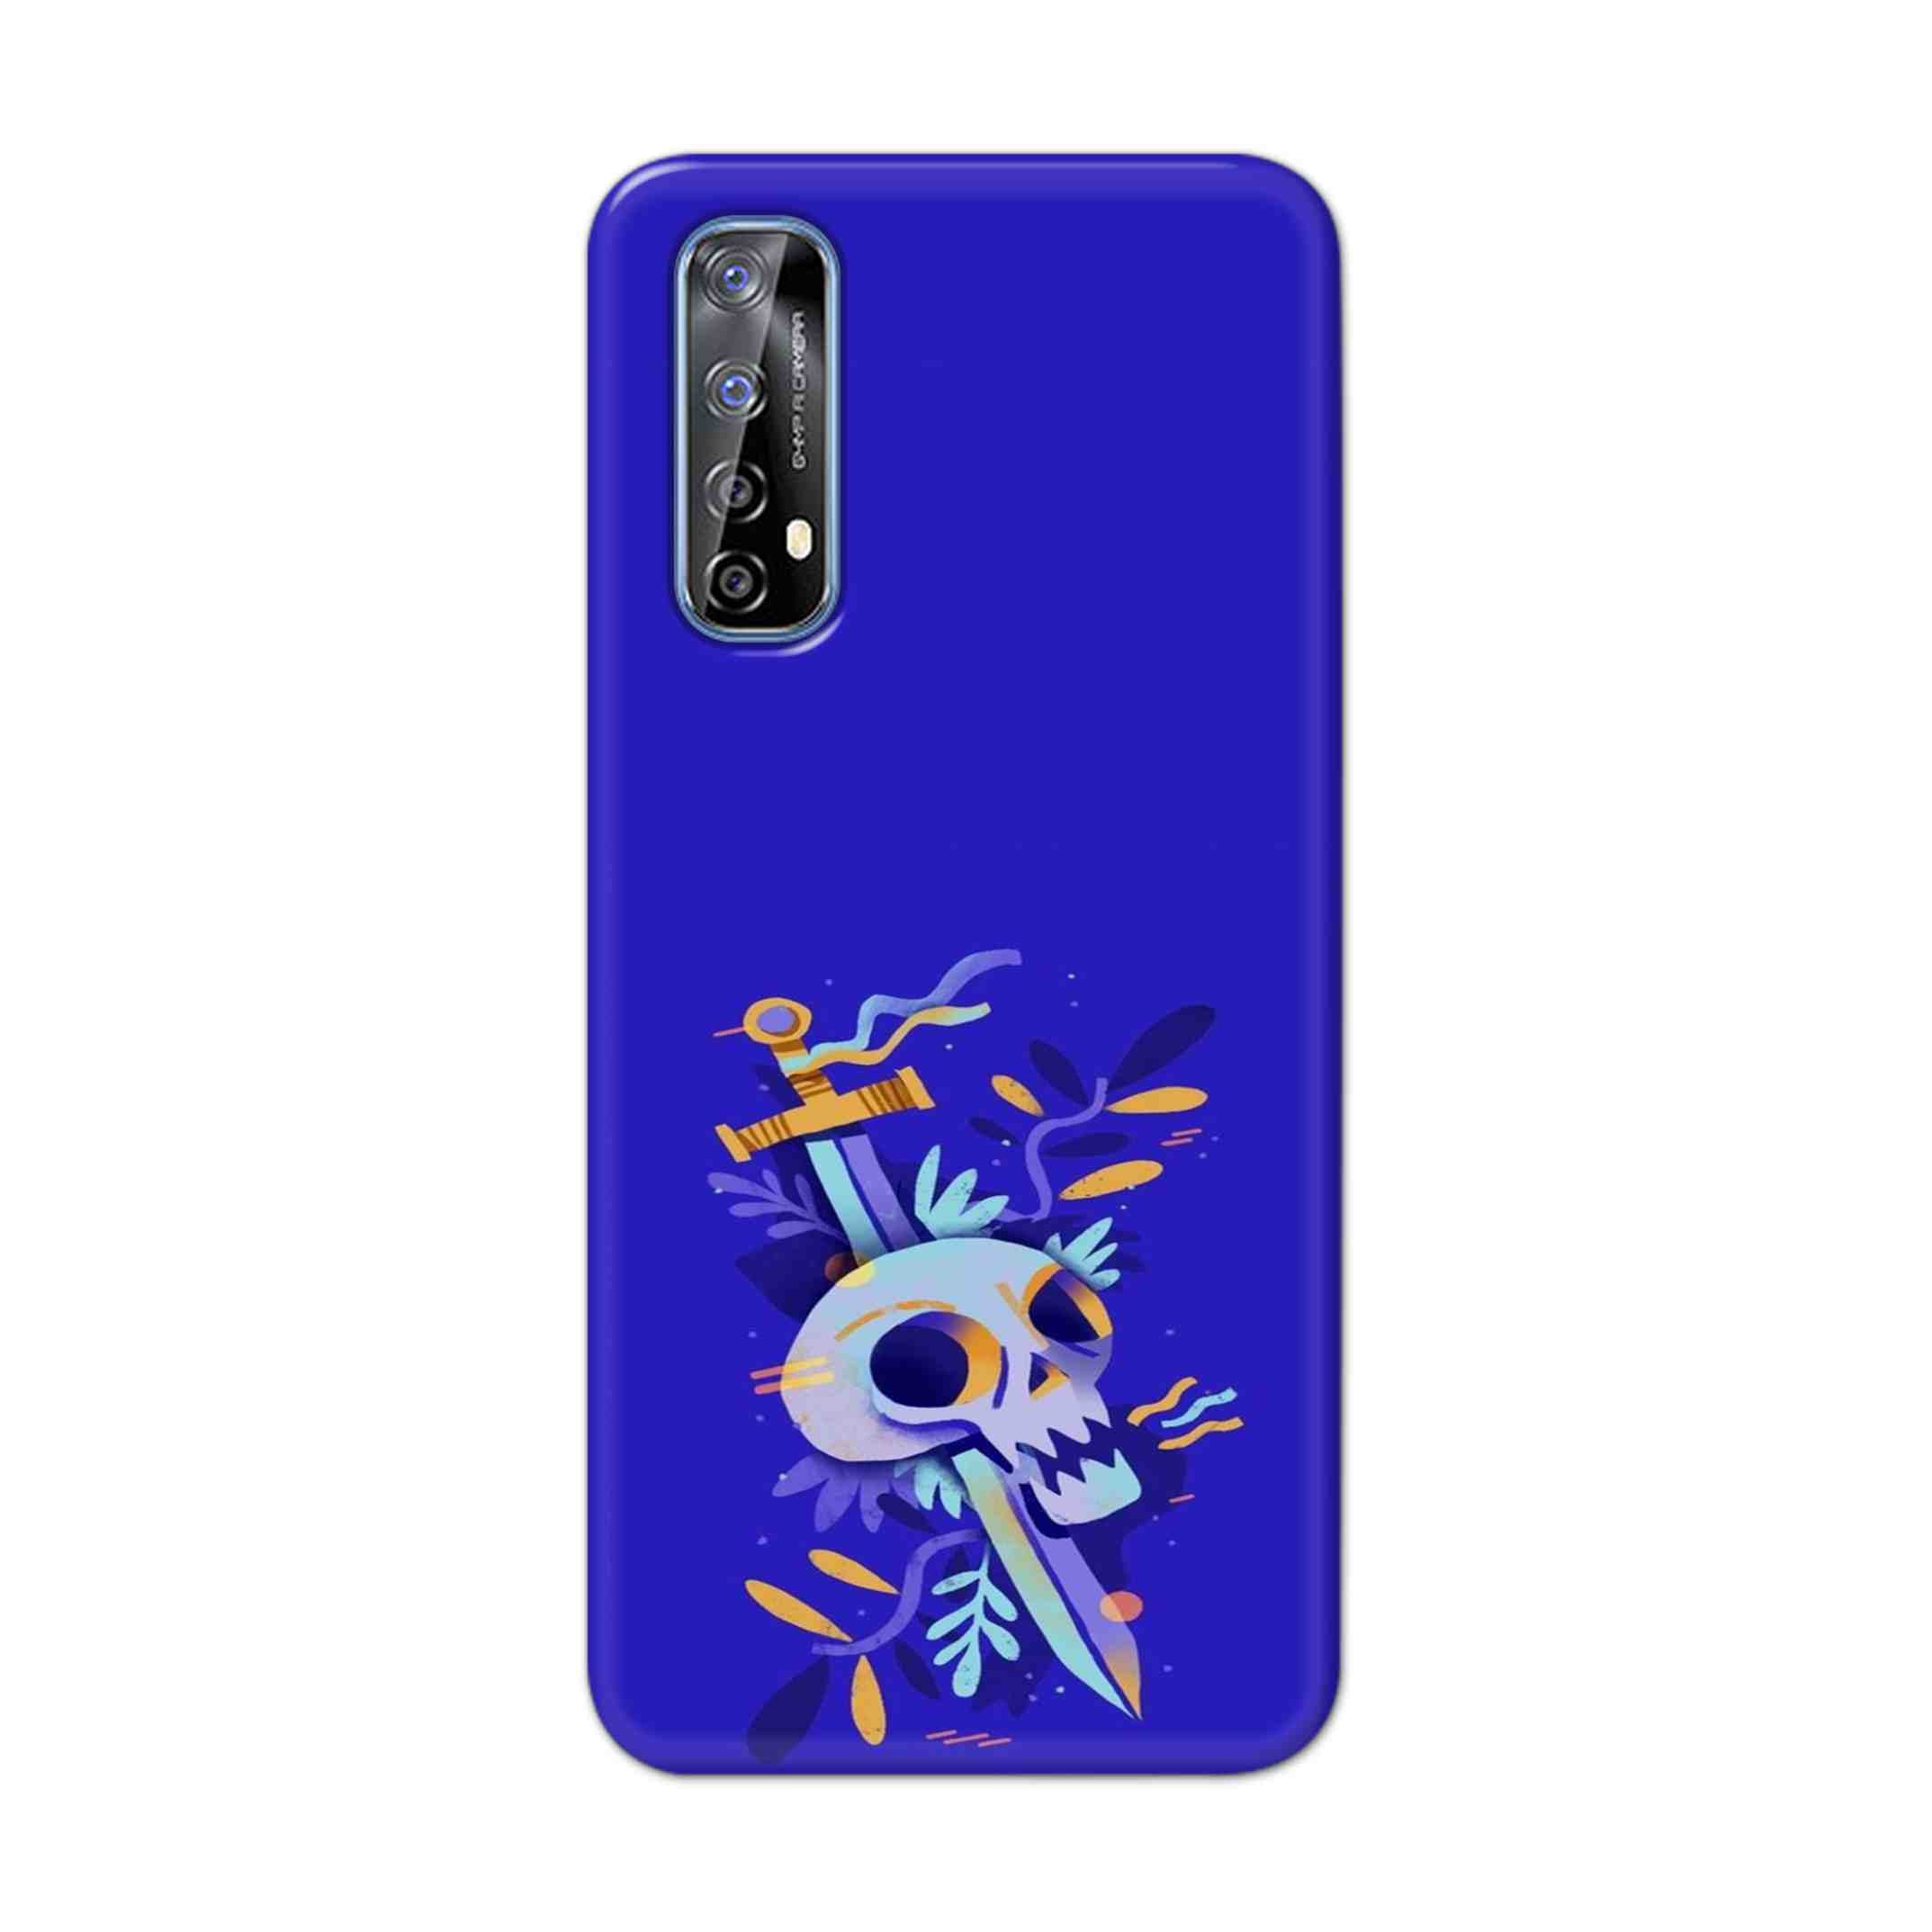 Buy Blue Skull Hard Back Mobile Phone Case Cover For Realme 7 Online